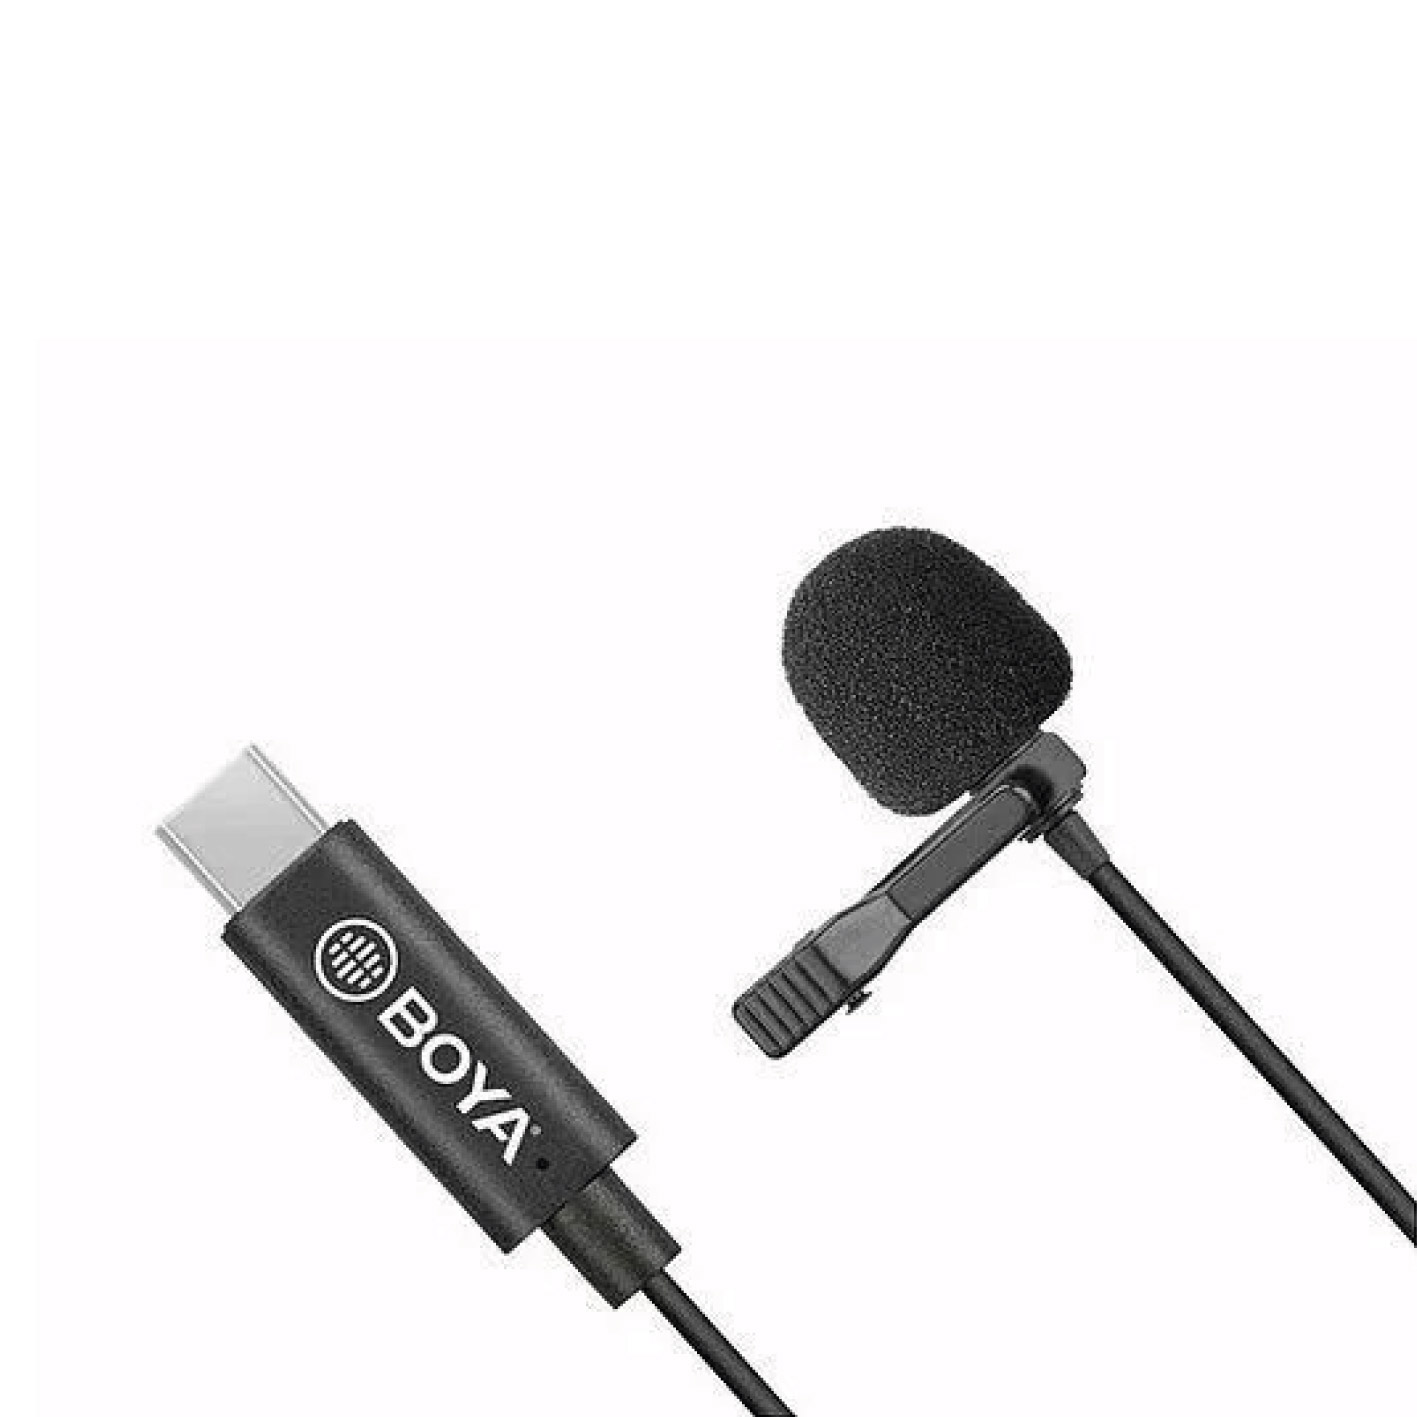 Micrófono Lavalier digital para android Boya By-M3